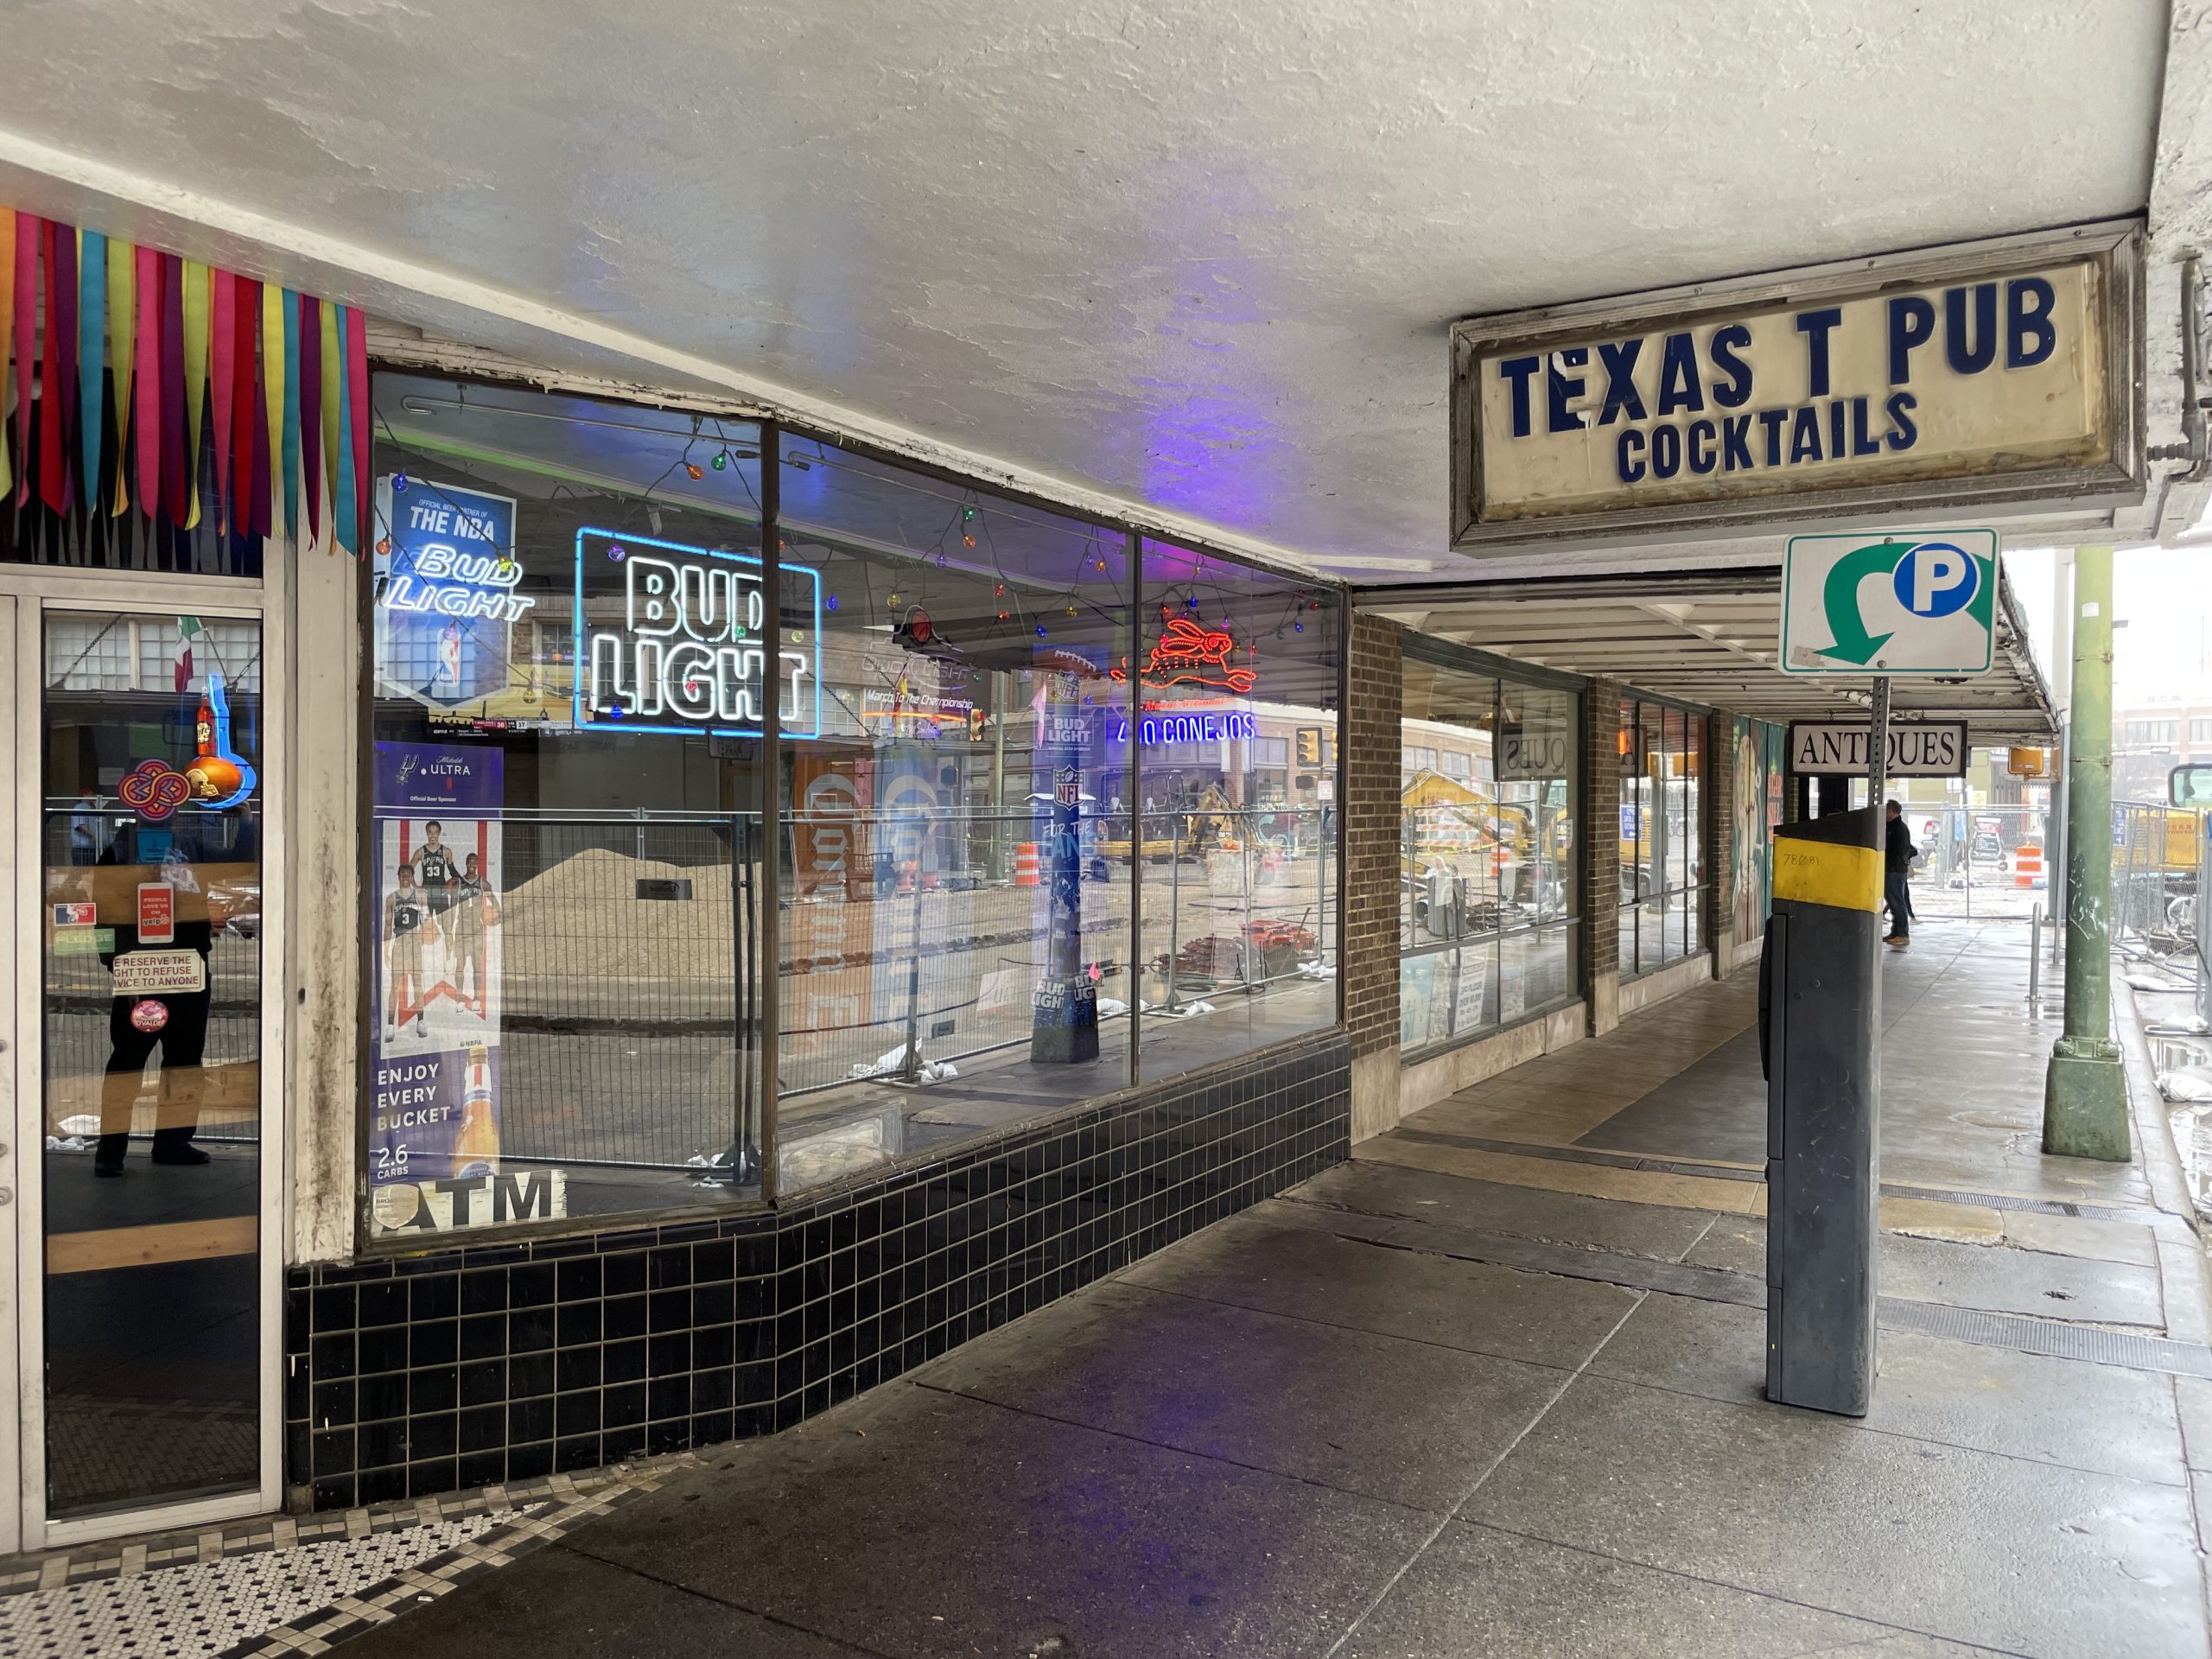 Texas T Pub - San Antonio Dive Bar - Sign